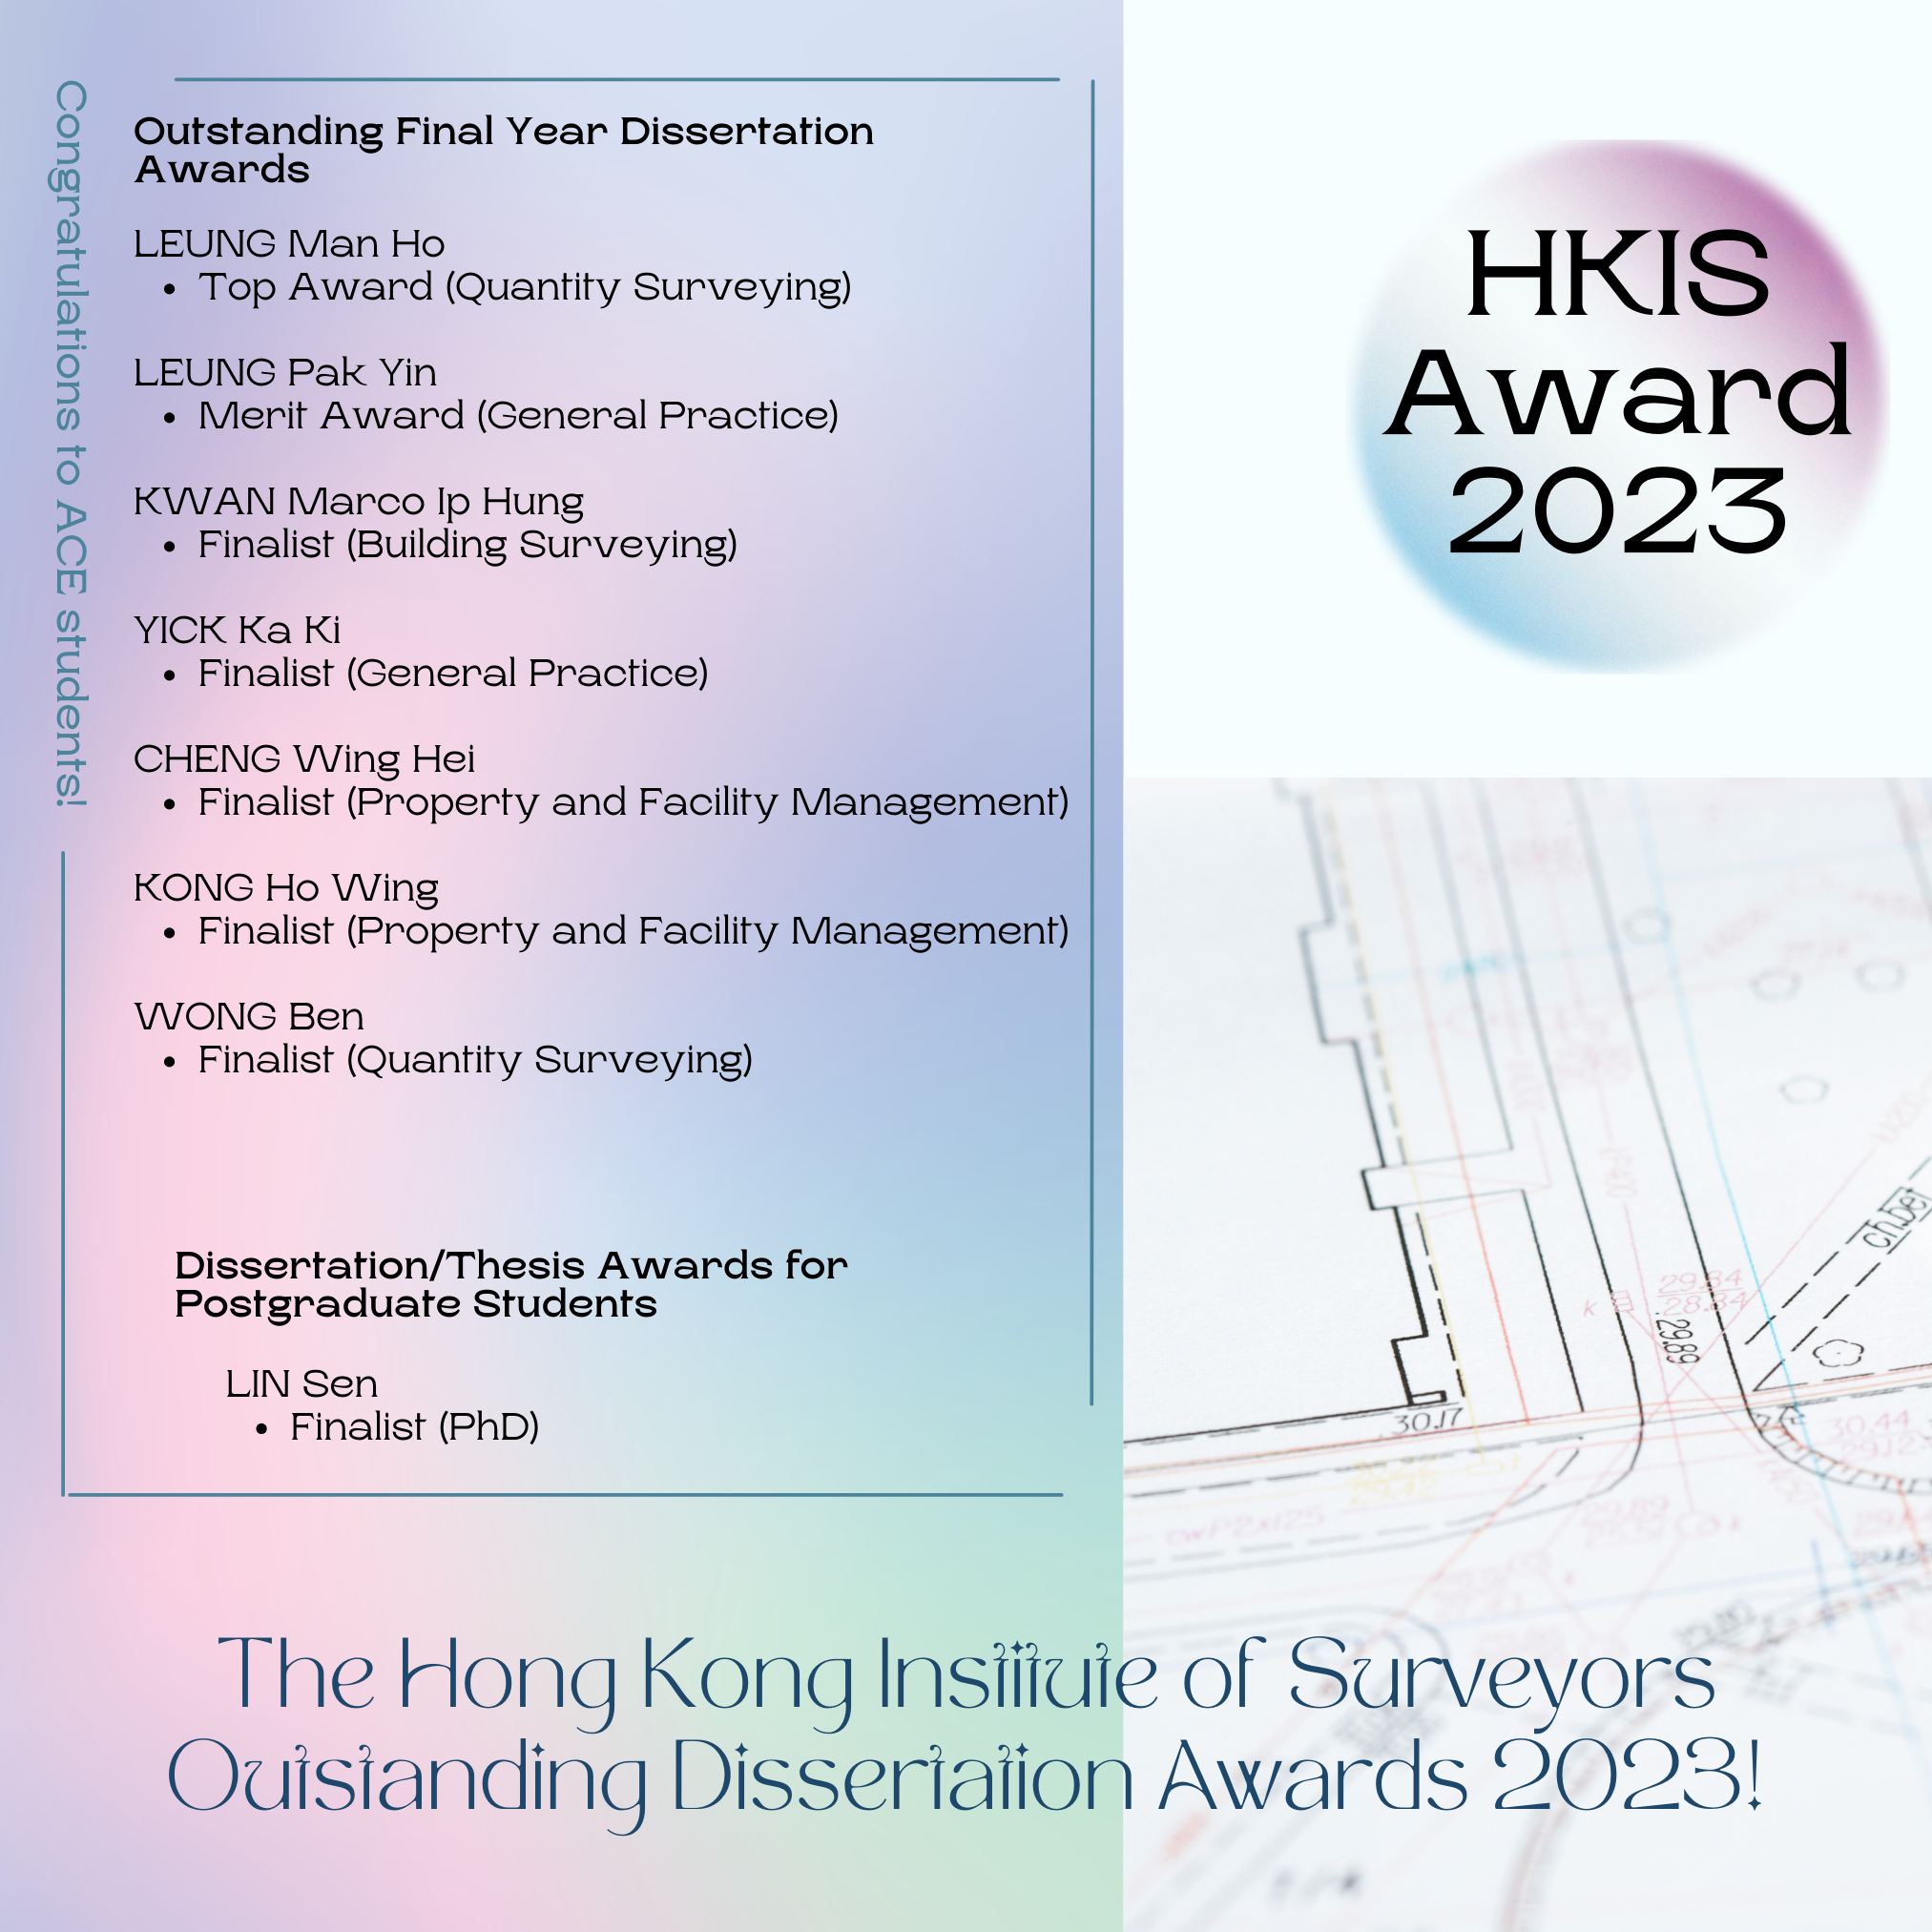 HKIS - Outstanding Dissertation Awards 2023